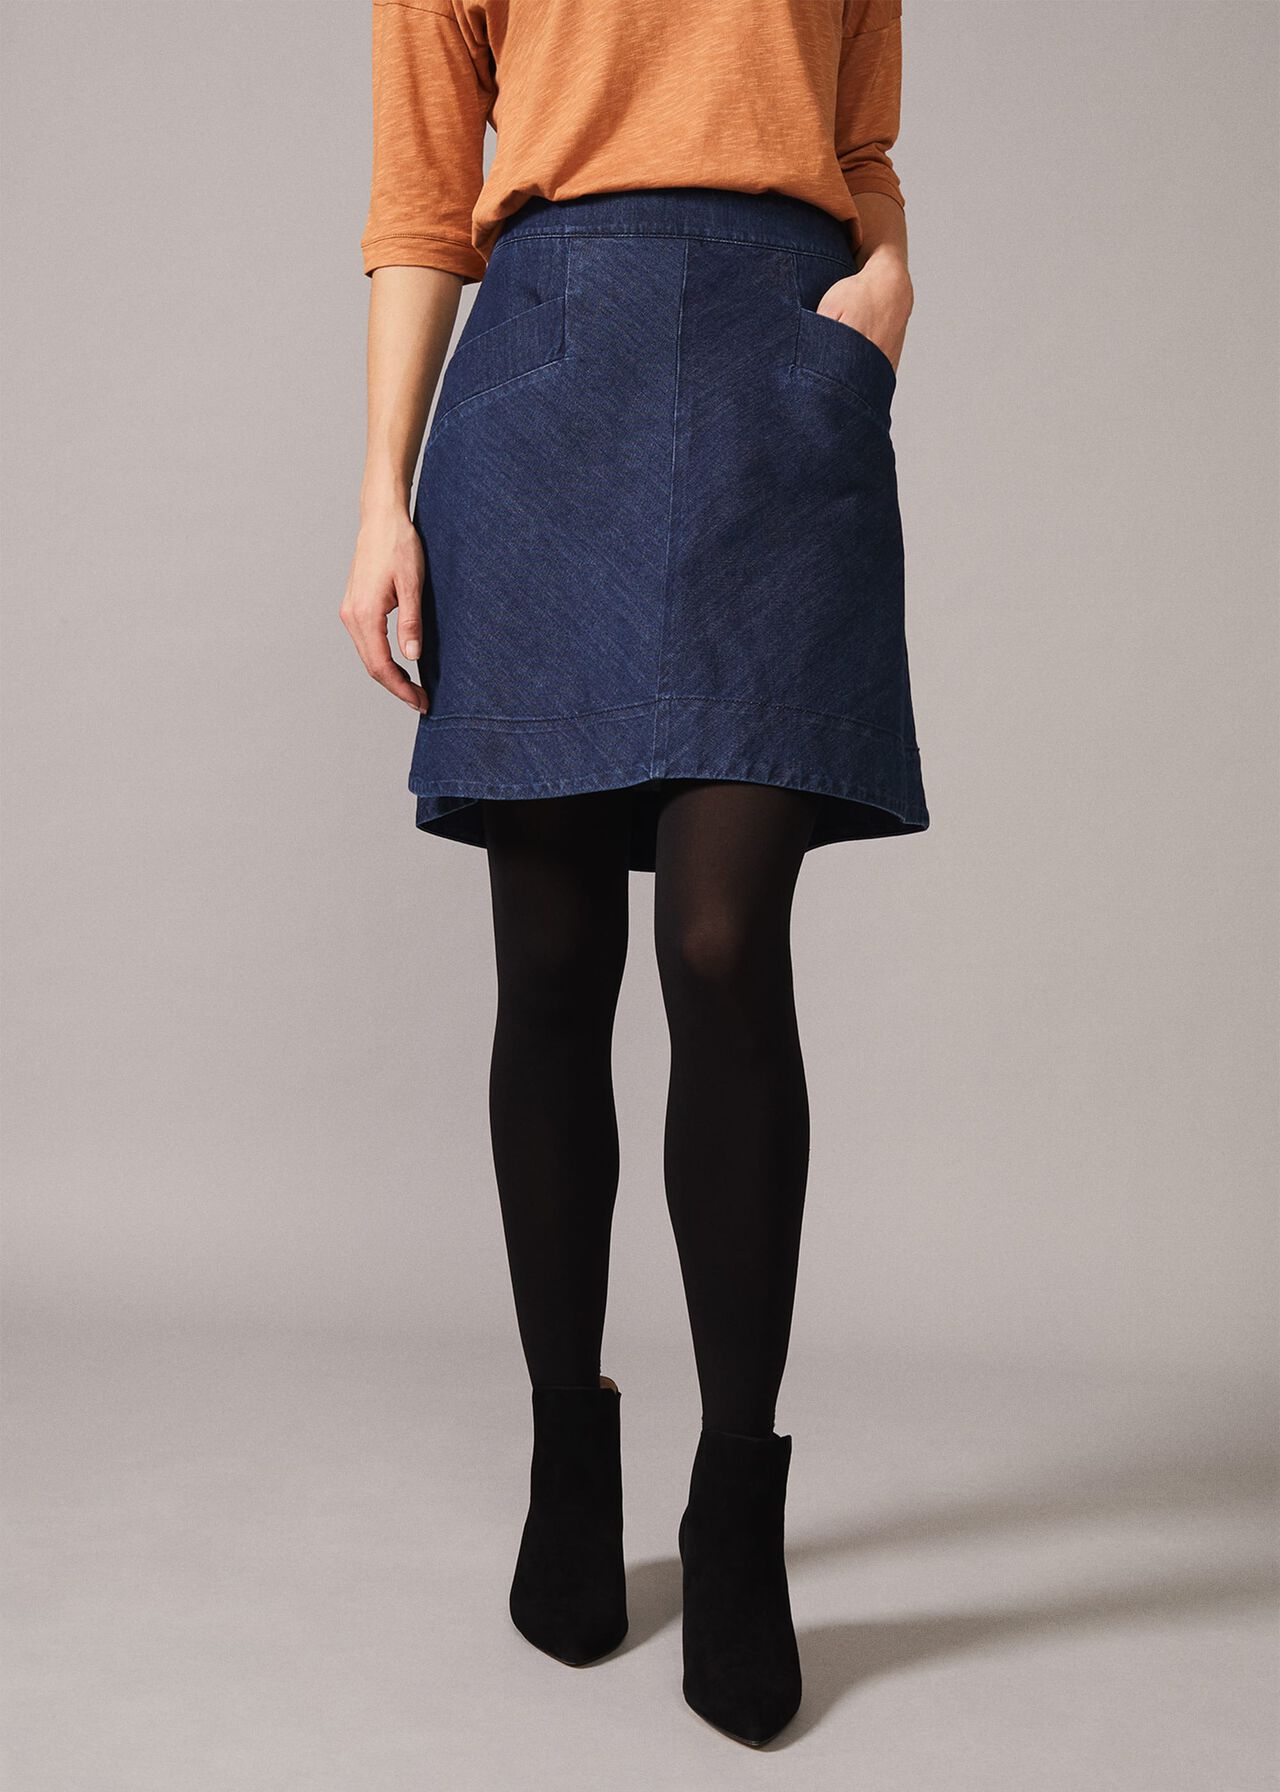 Inkiri A-Line Denim Skirt | Phase Eight